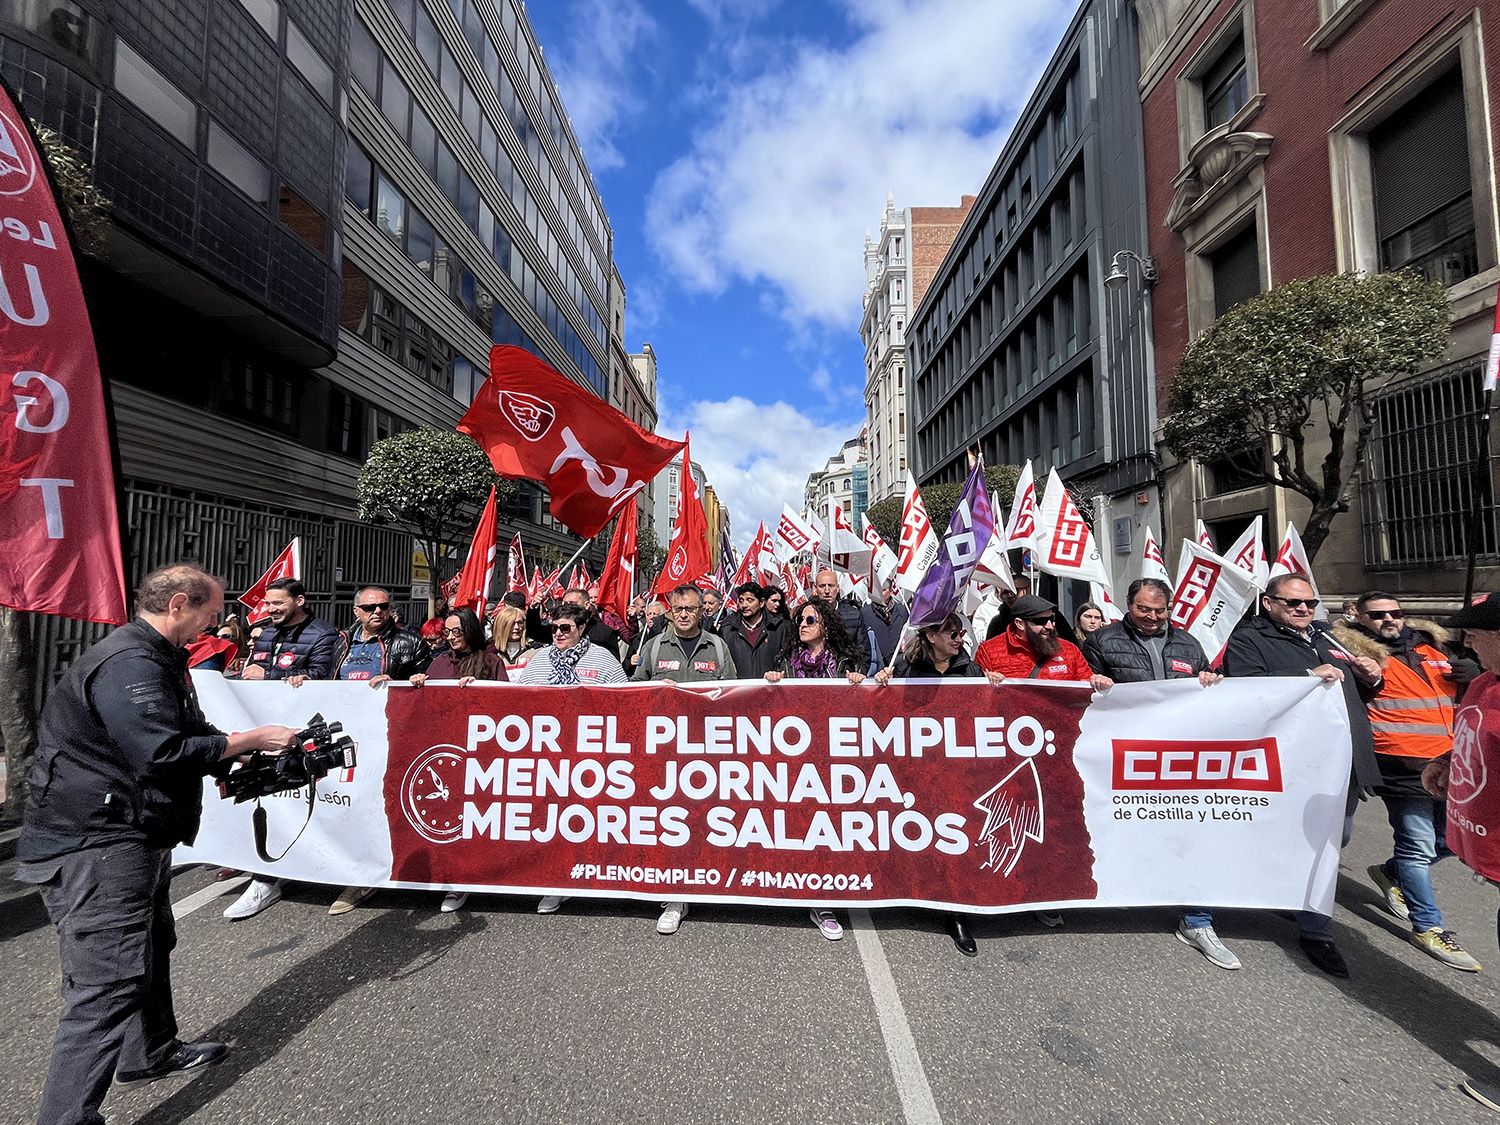 Manifestación del Día del Trabajador en León | José Martín